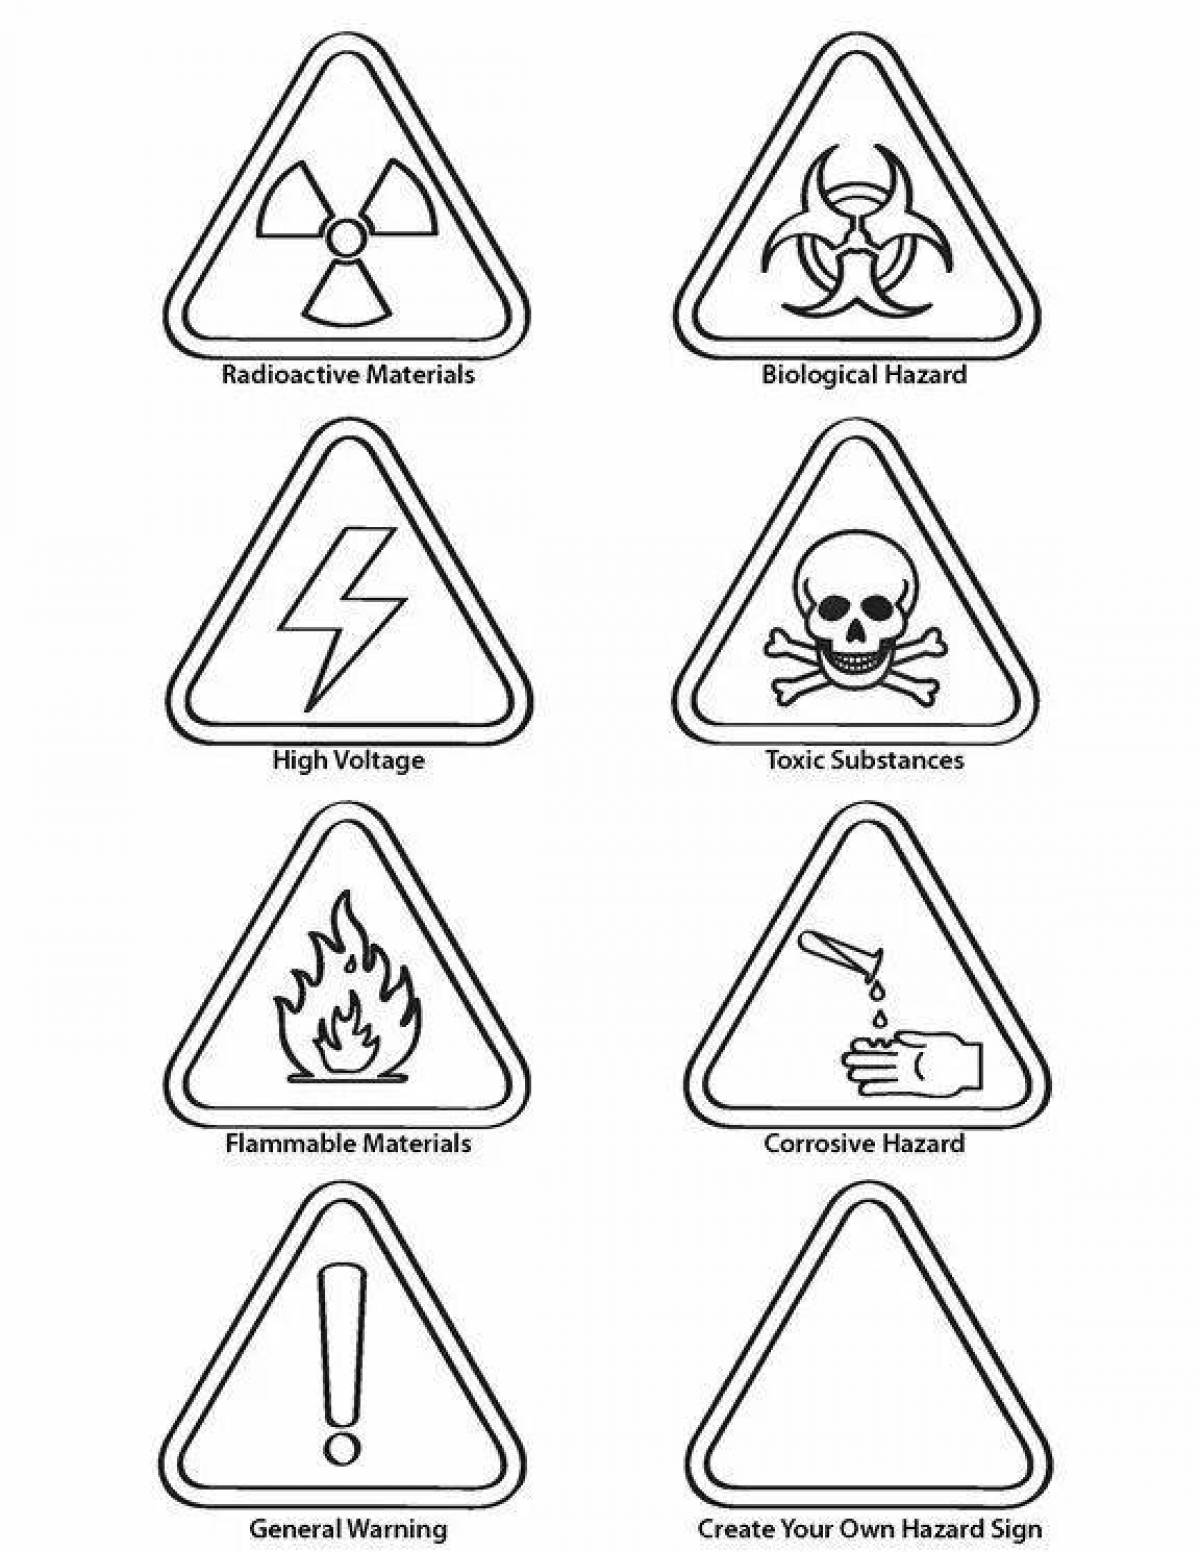 Fun warning signs coloring page